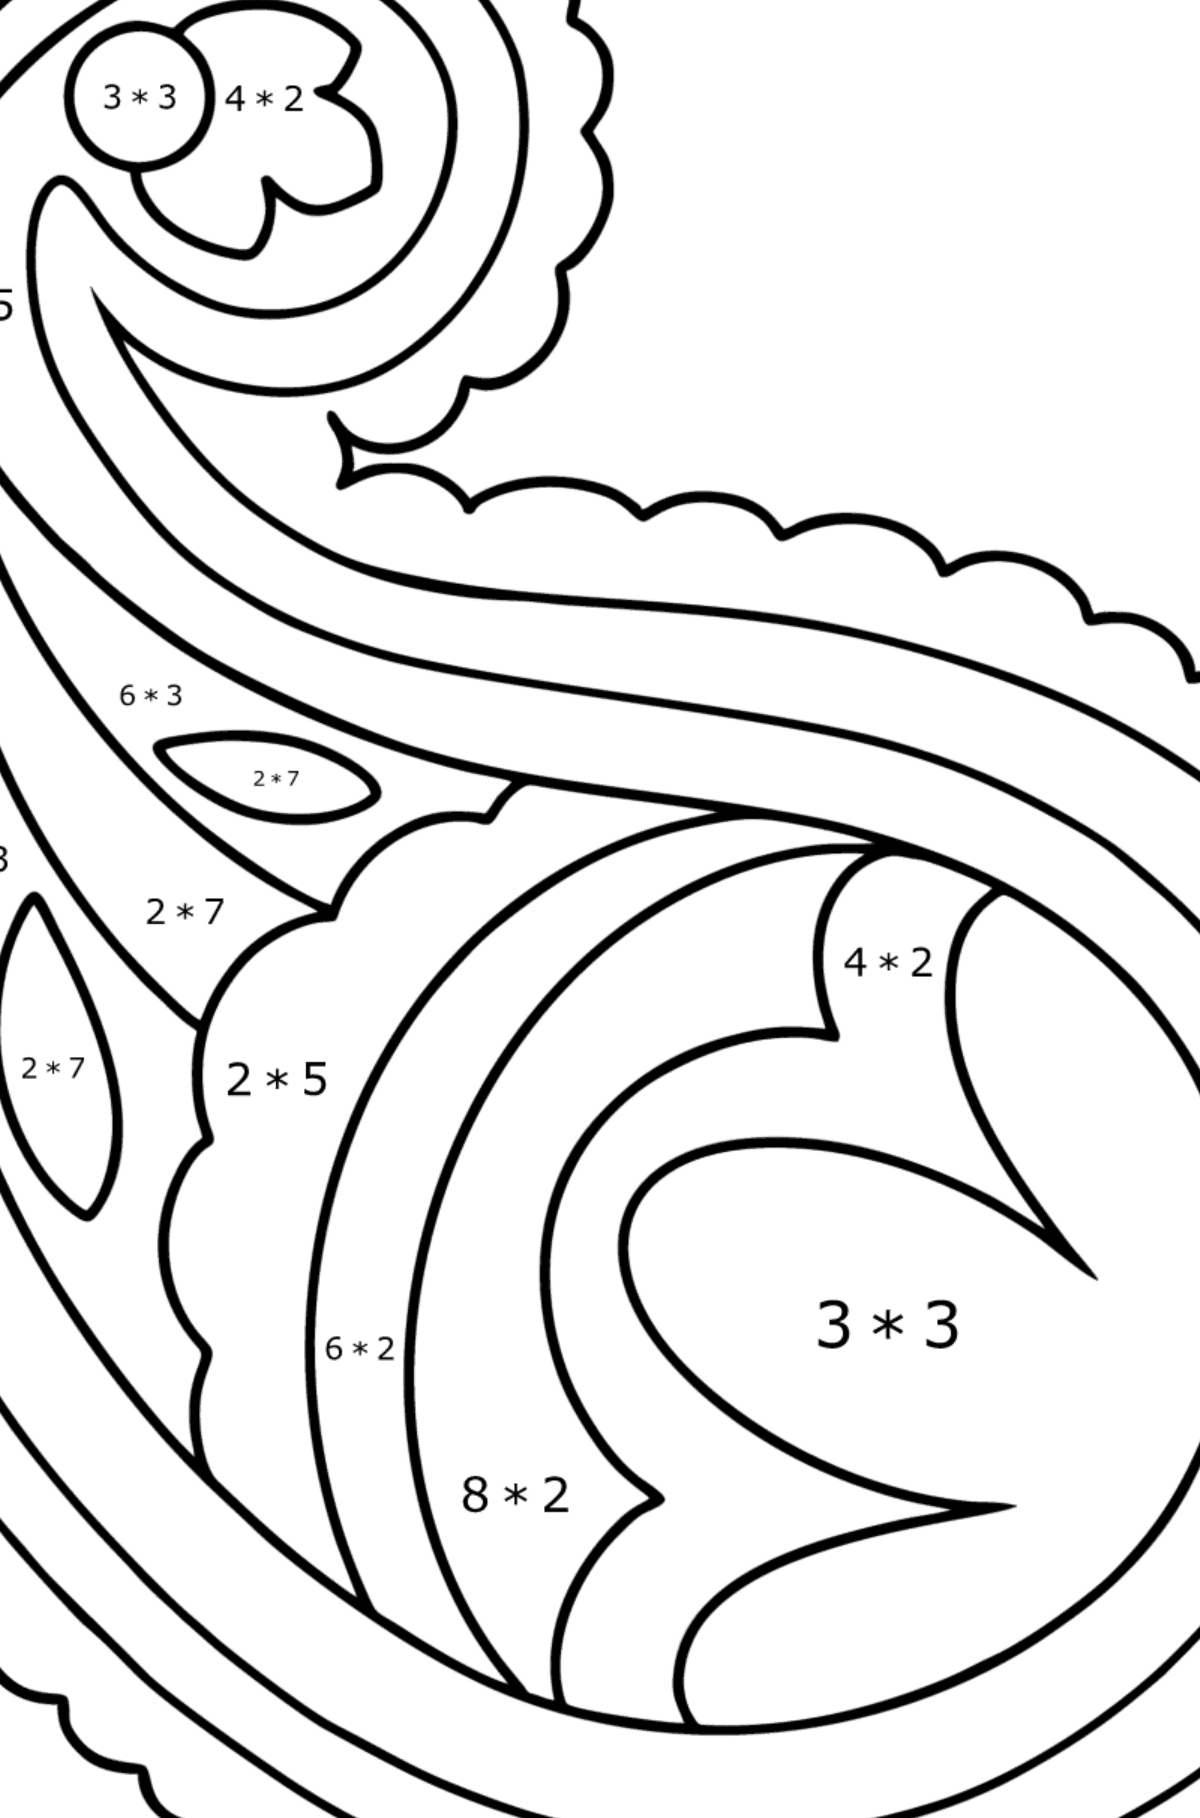 Ausmalbild Paisley - 16 Elemente - Mathe Ausmalbilder - Multiplikation für Kinder